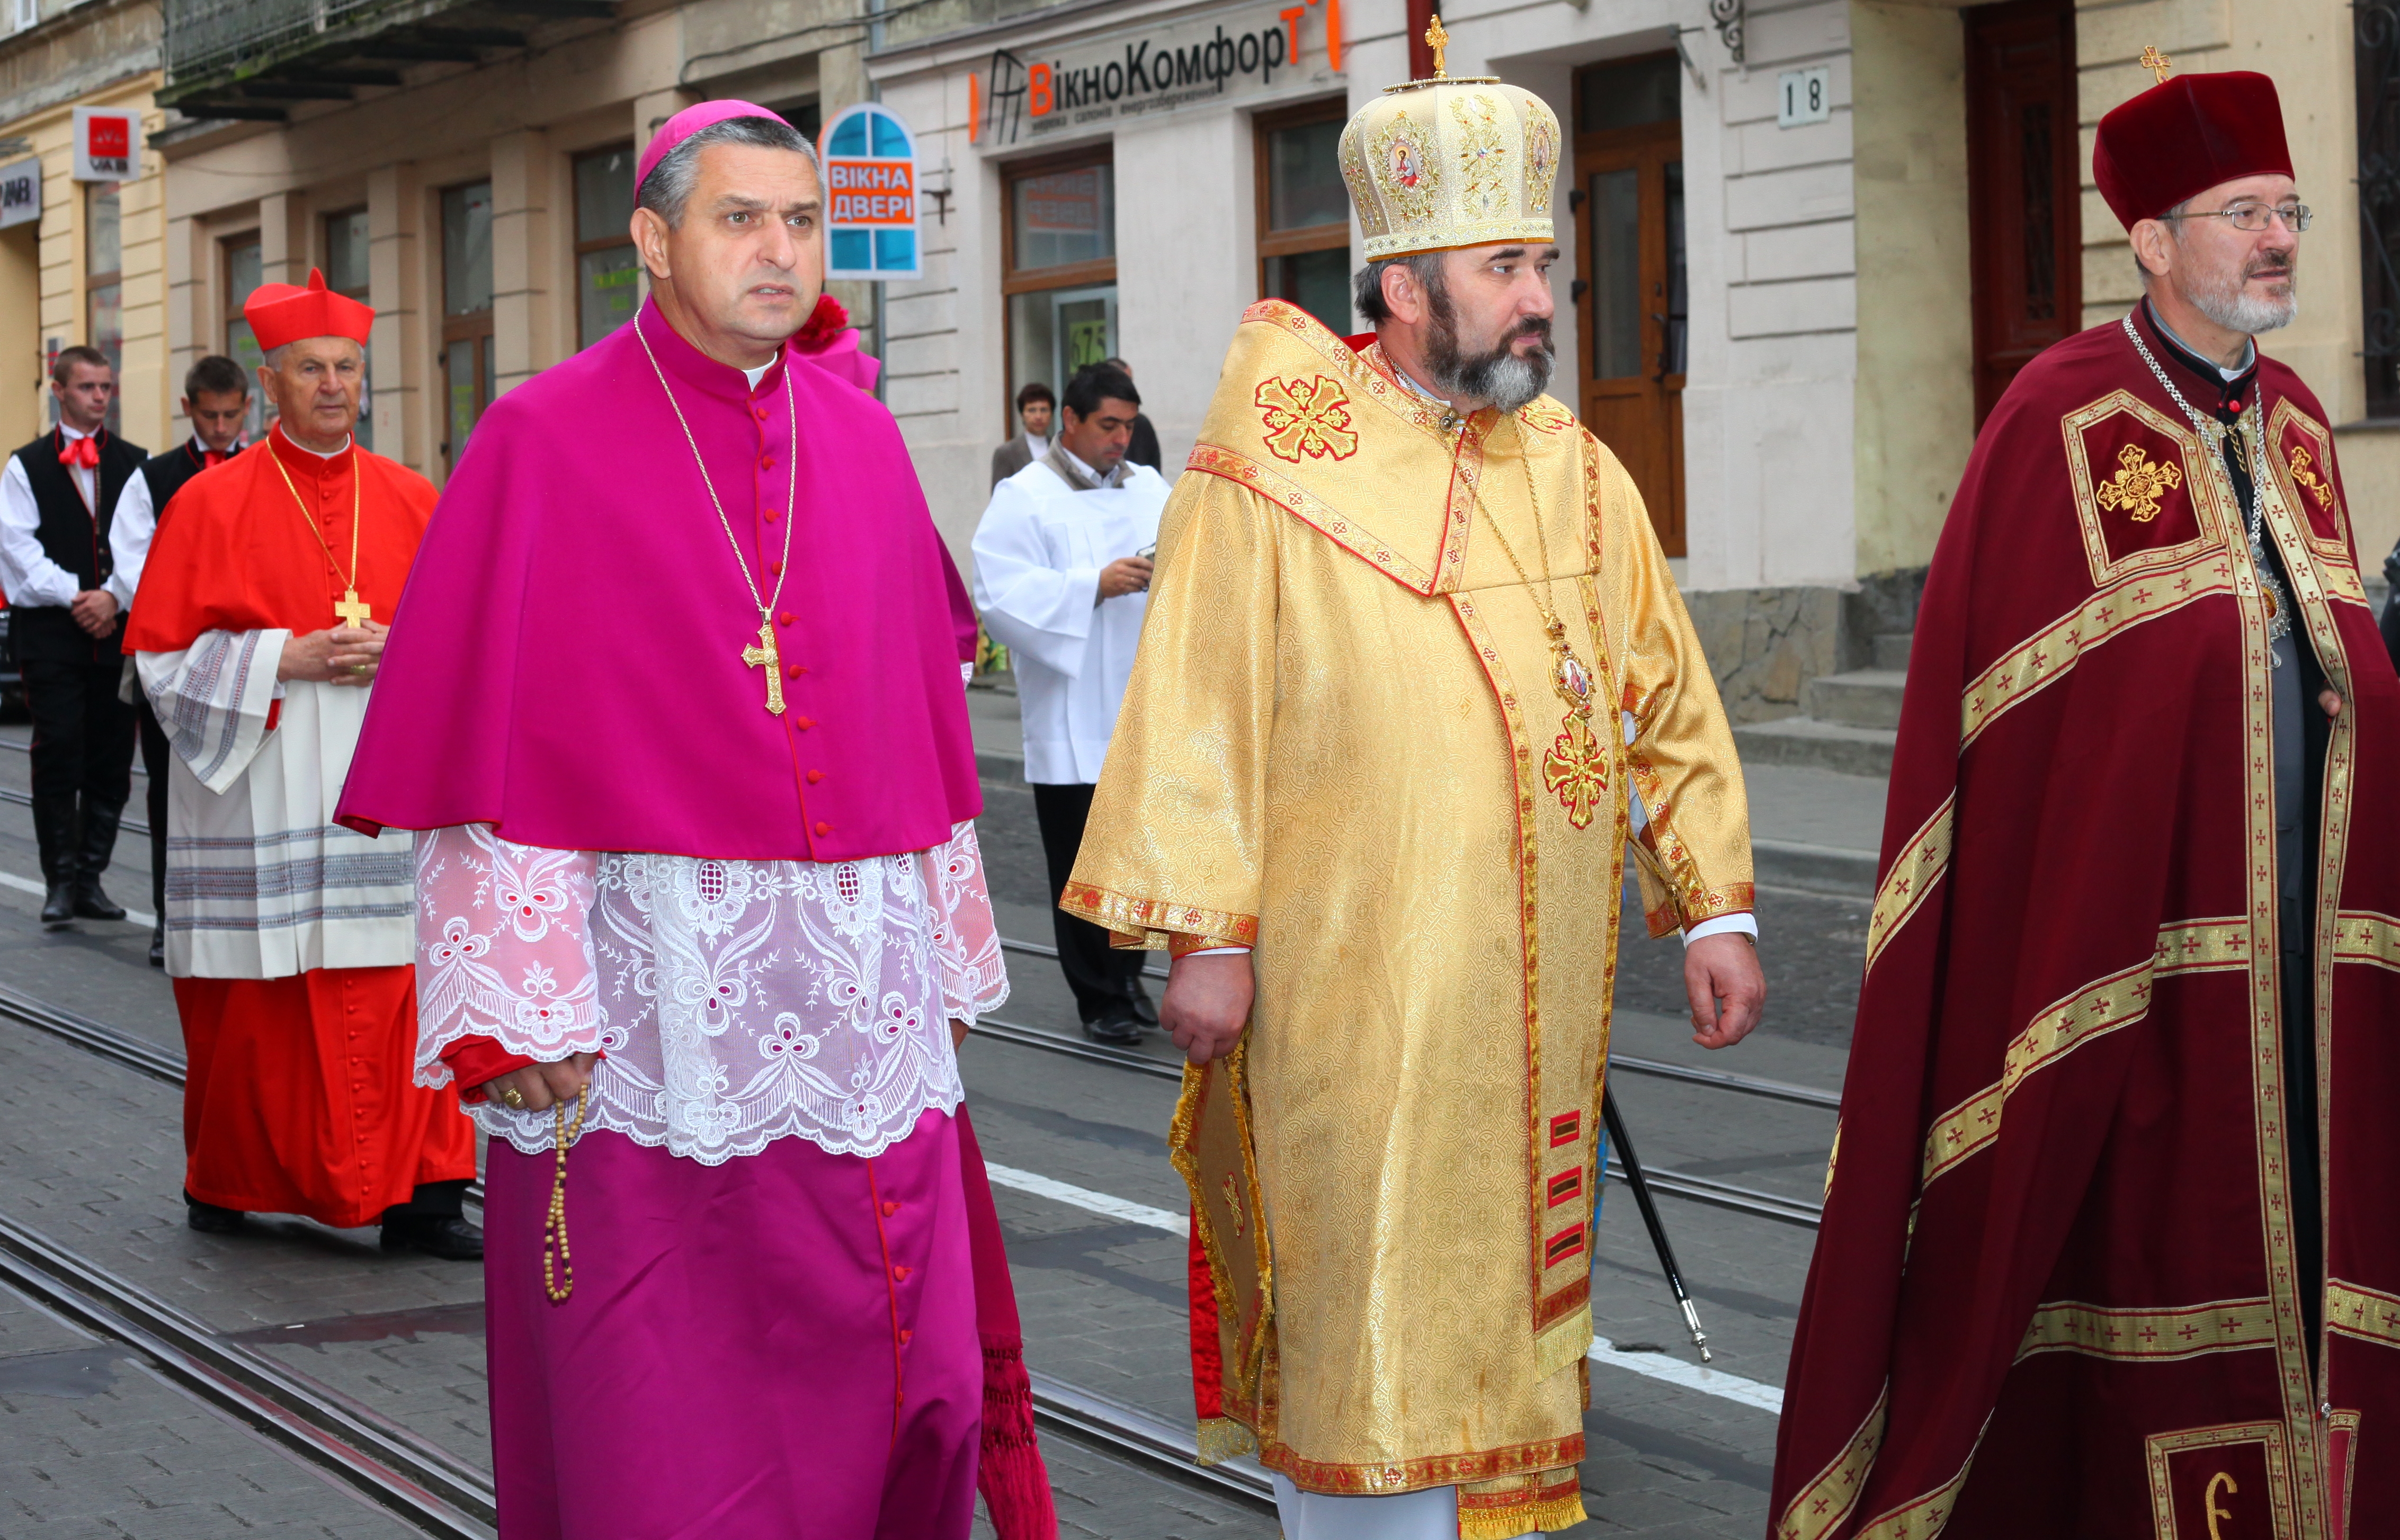 priests during a Catholic celebration, photo 2